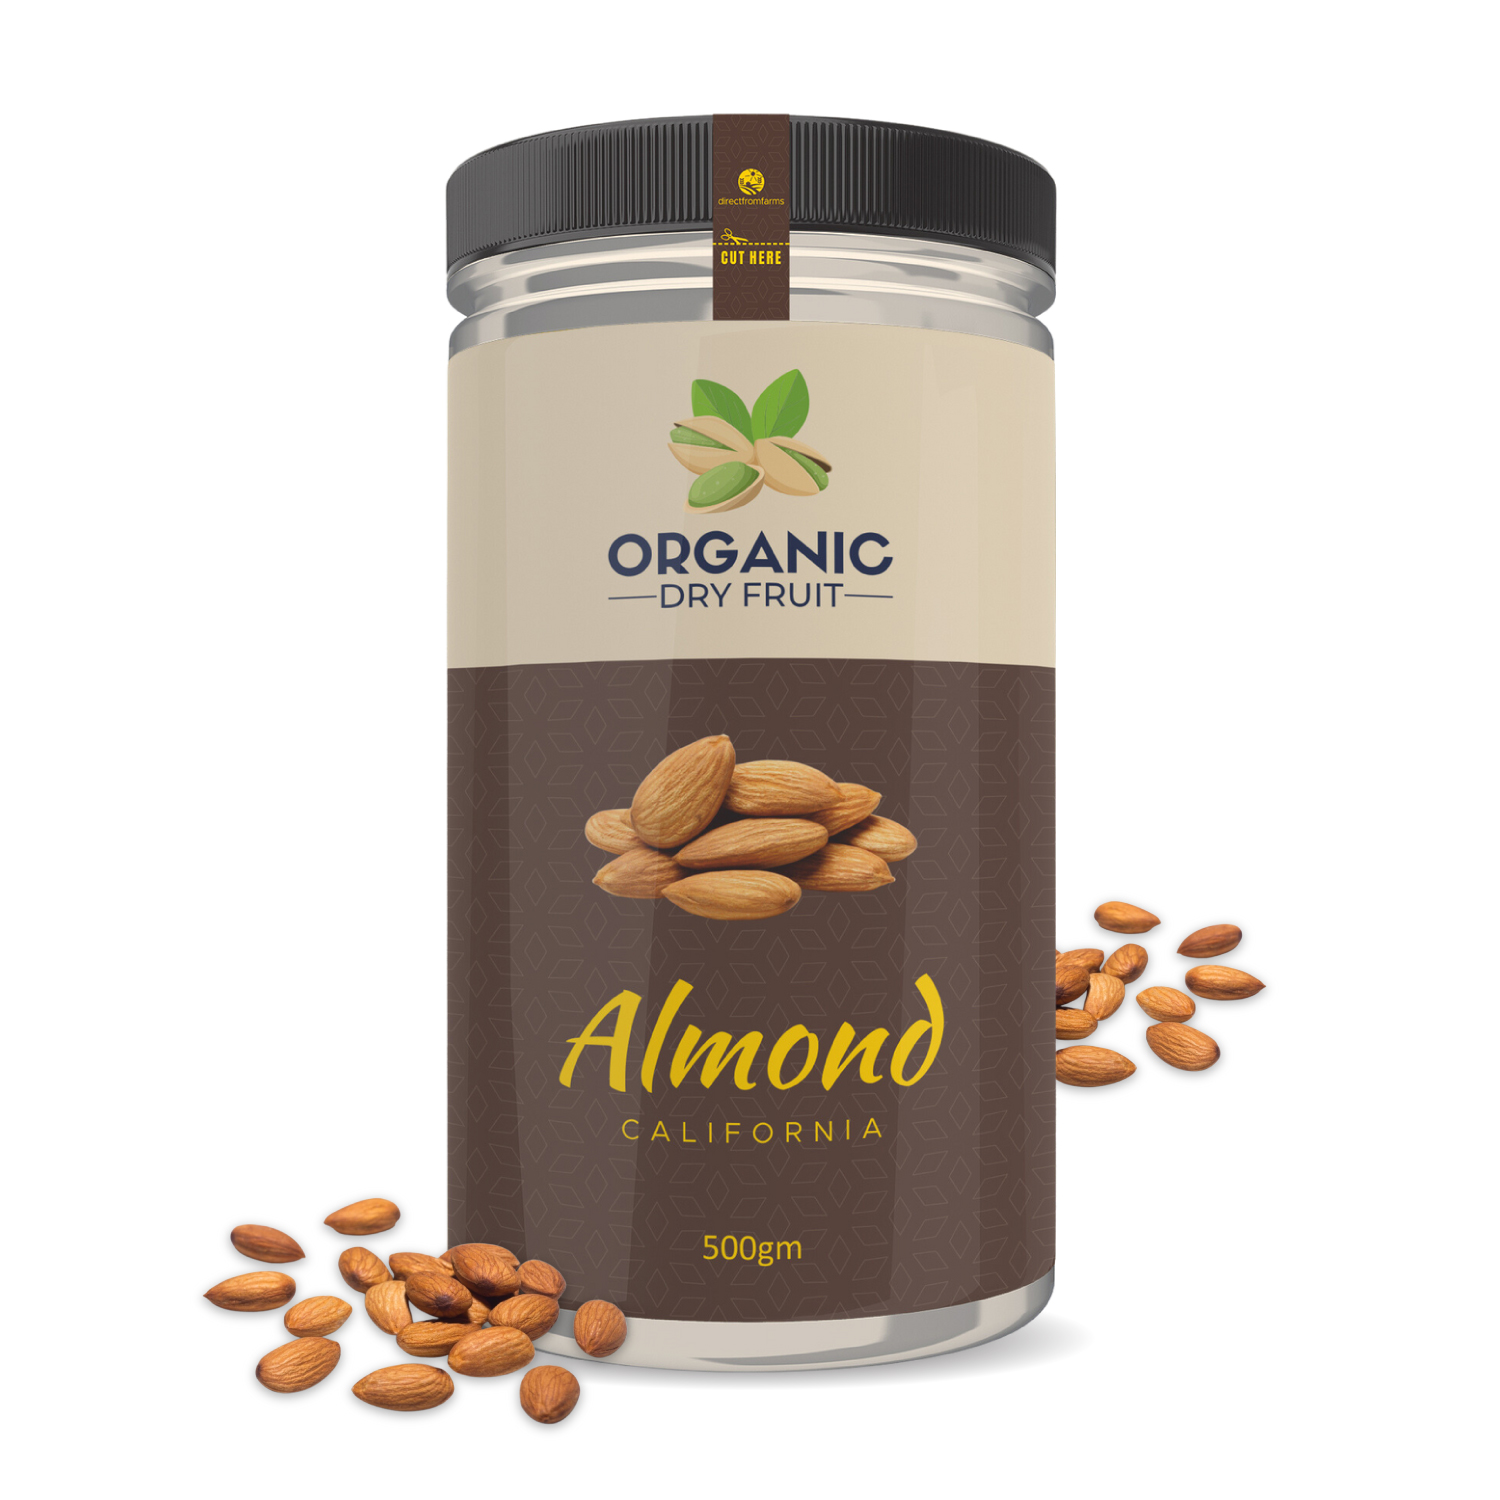 California Almonds organic dry fruit